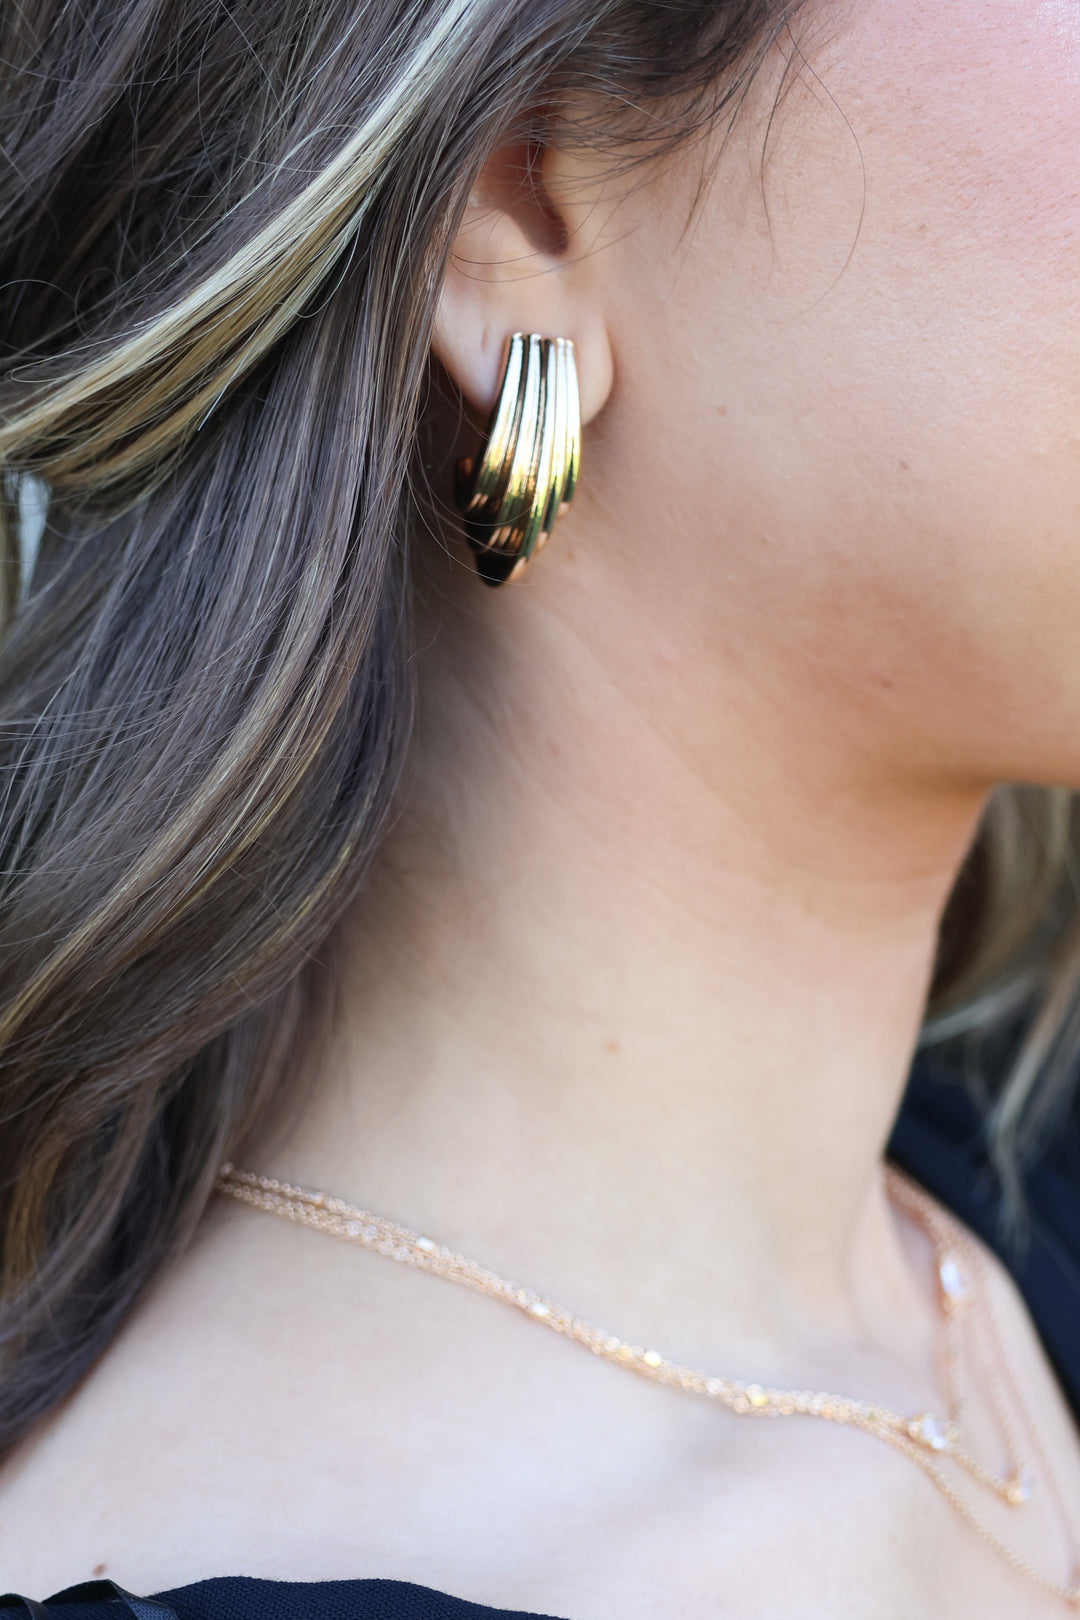 Material Girl Earrings in Gold - ShopSpoiled